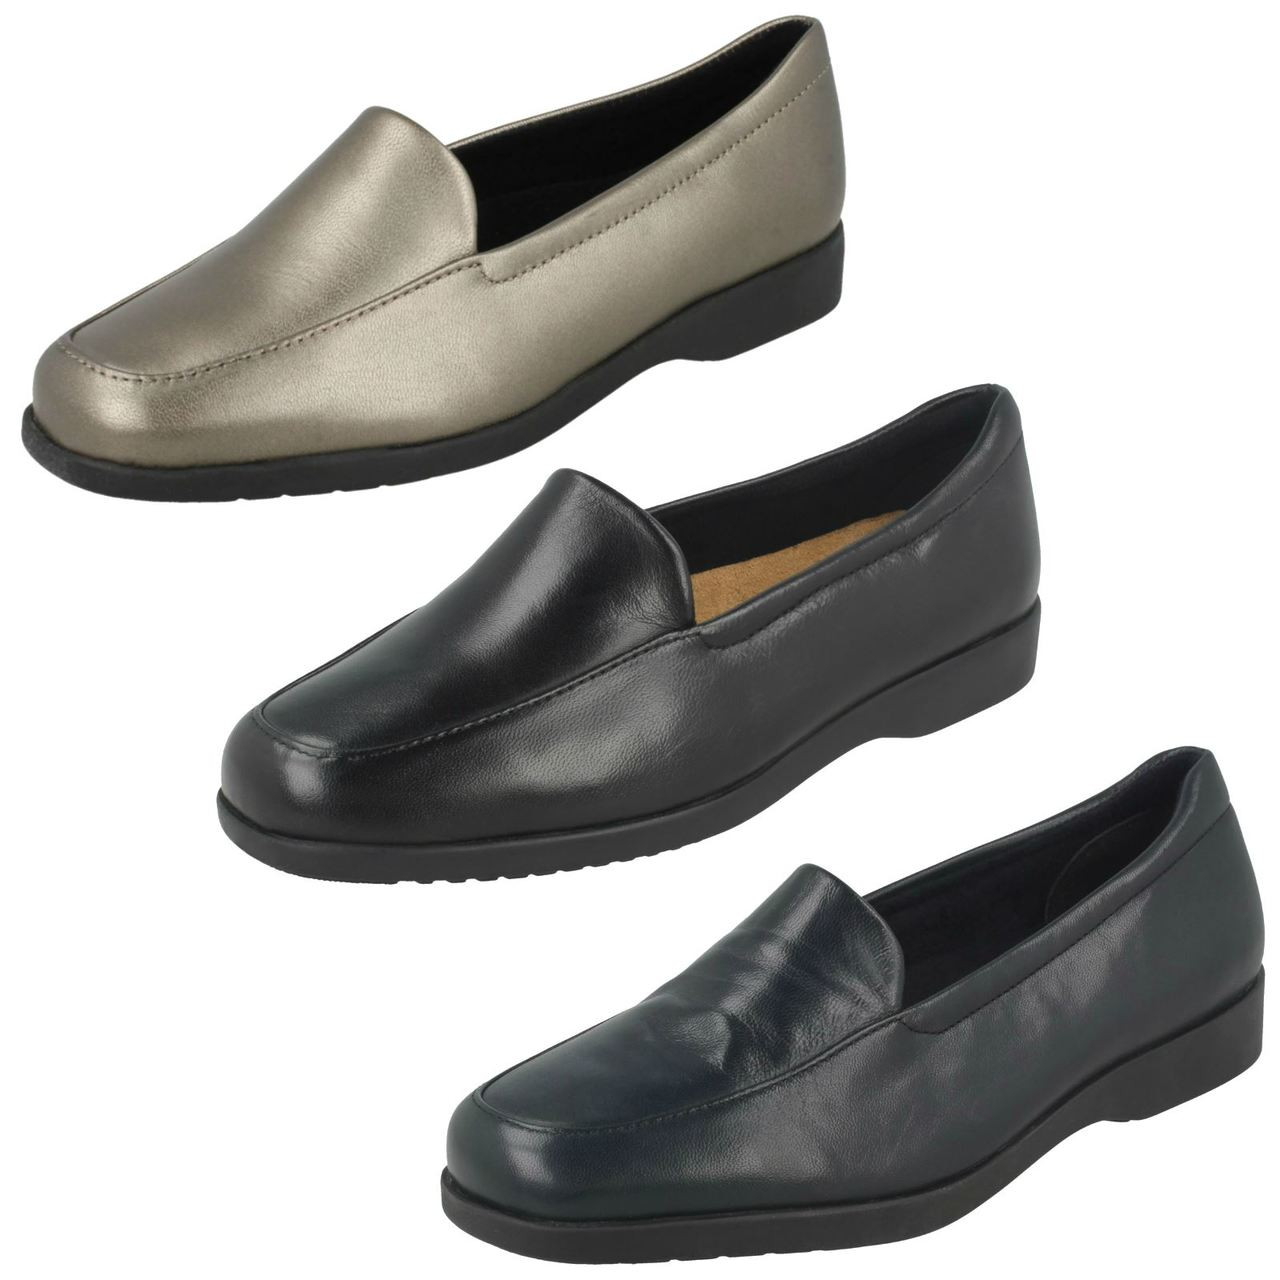 Camarada Detectable silencio Ladies Clarks Flat Loafer Style Shoes Georgia